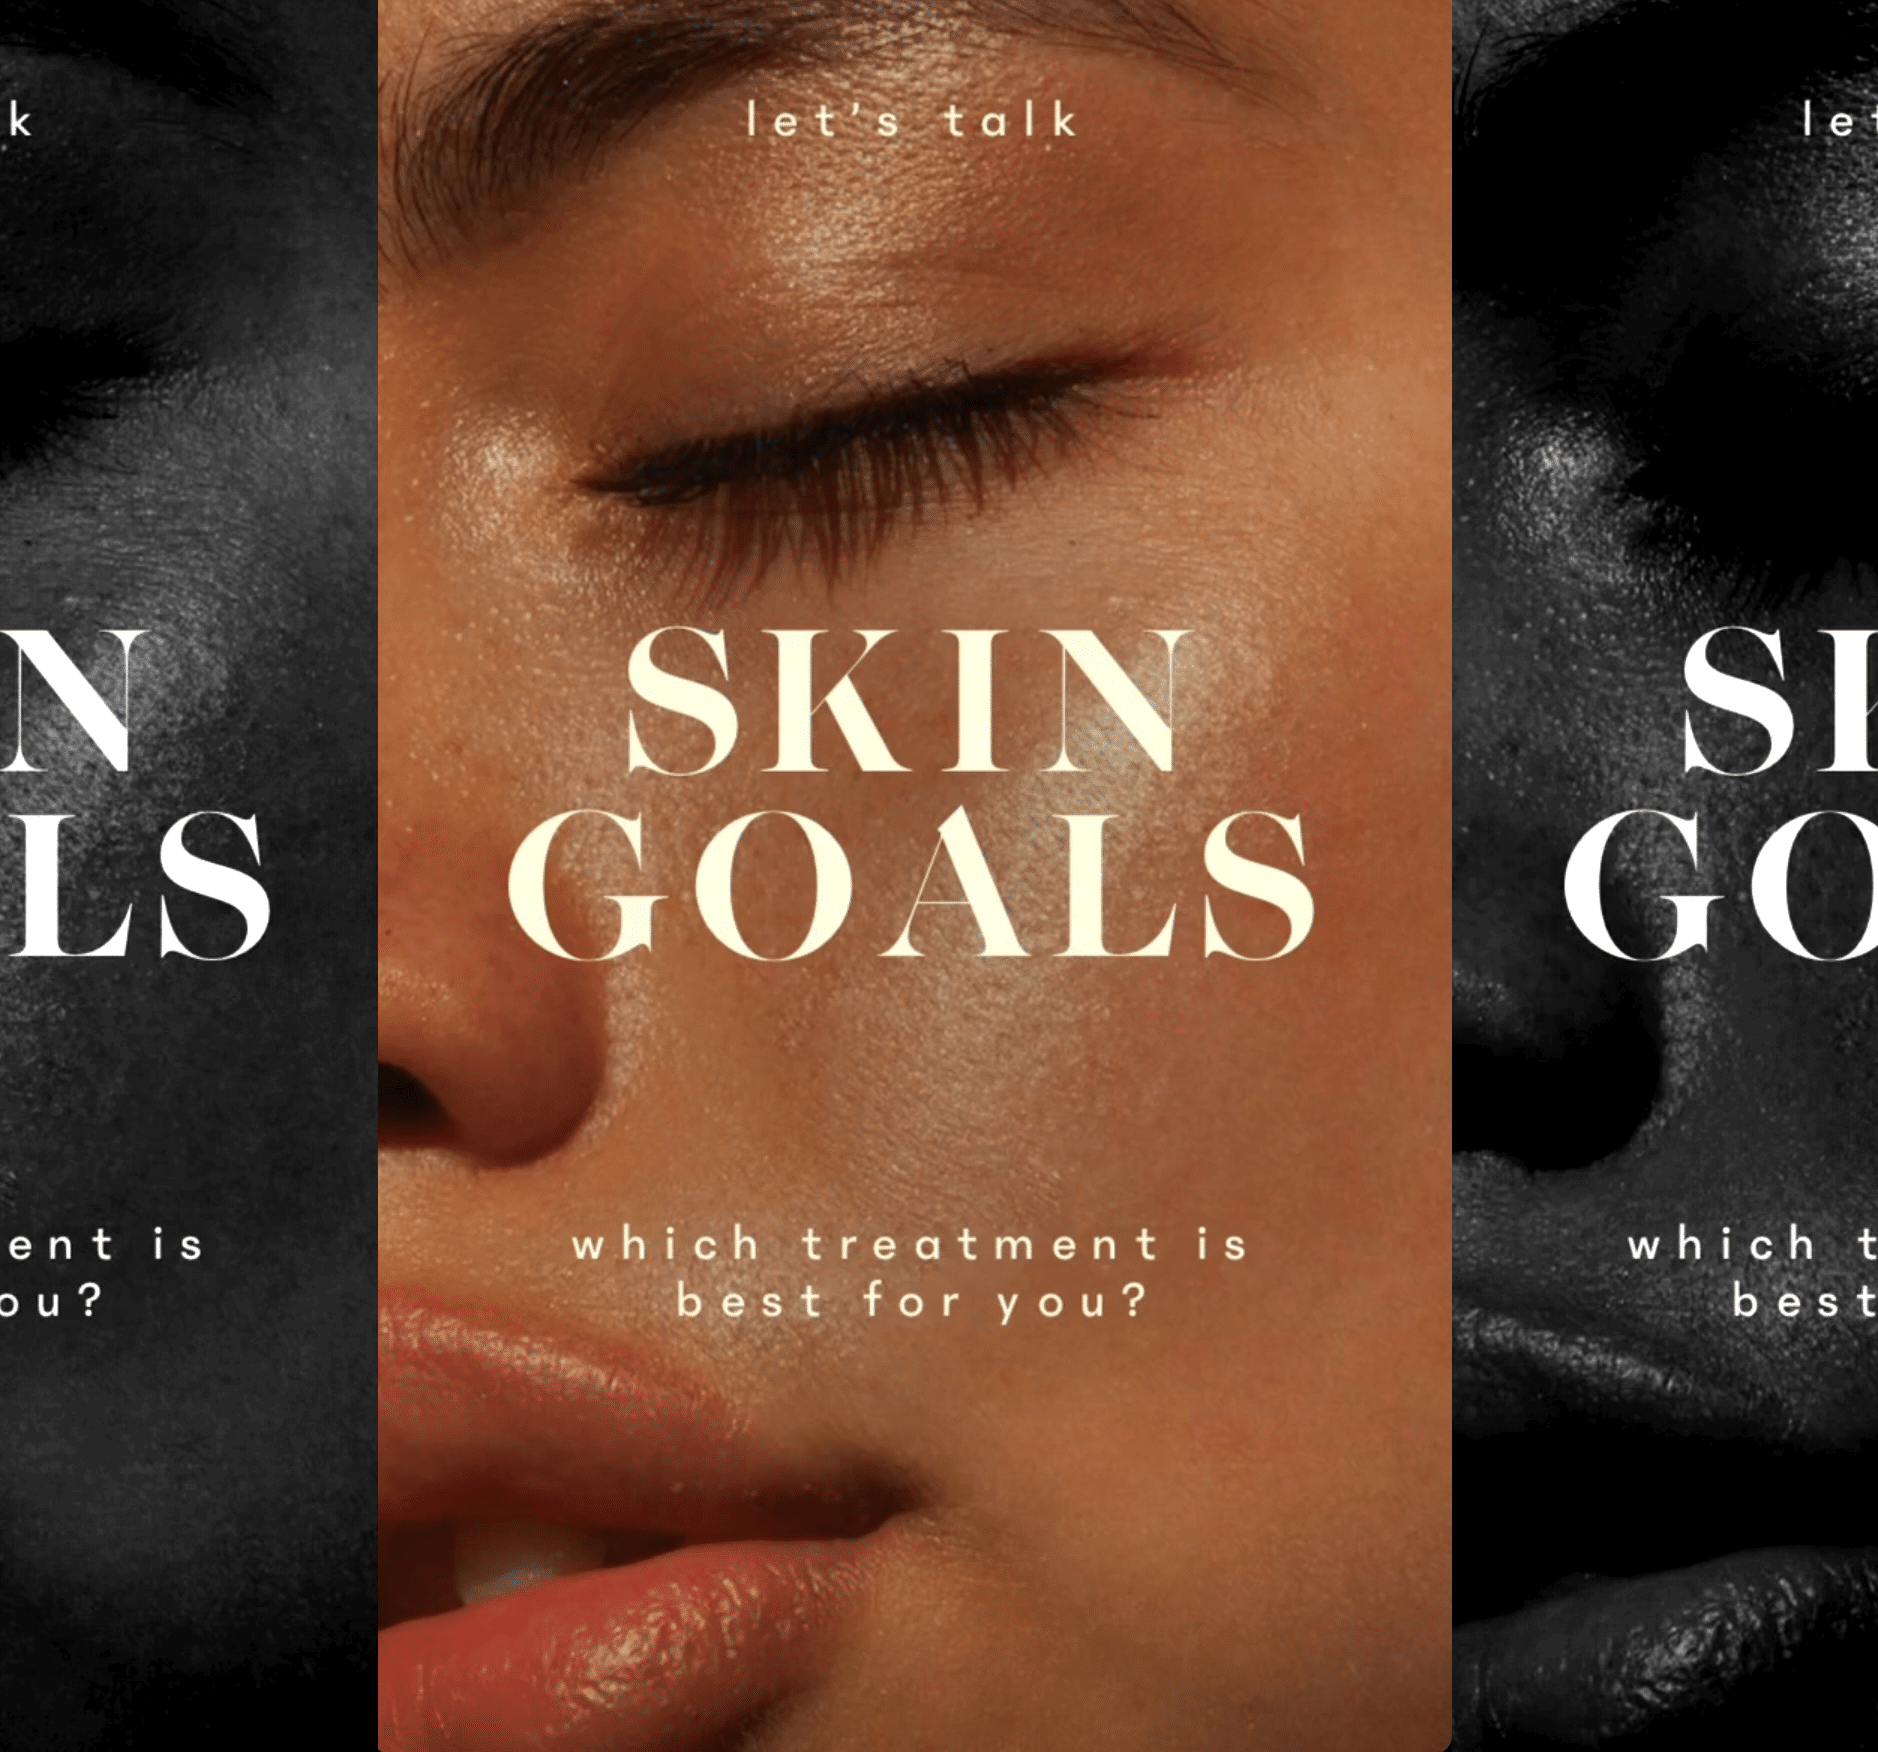 Let's Talk About Skin Goals